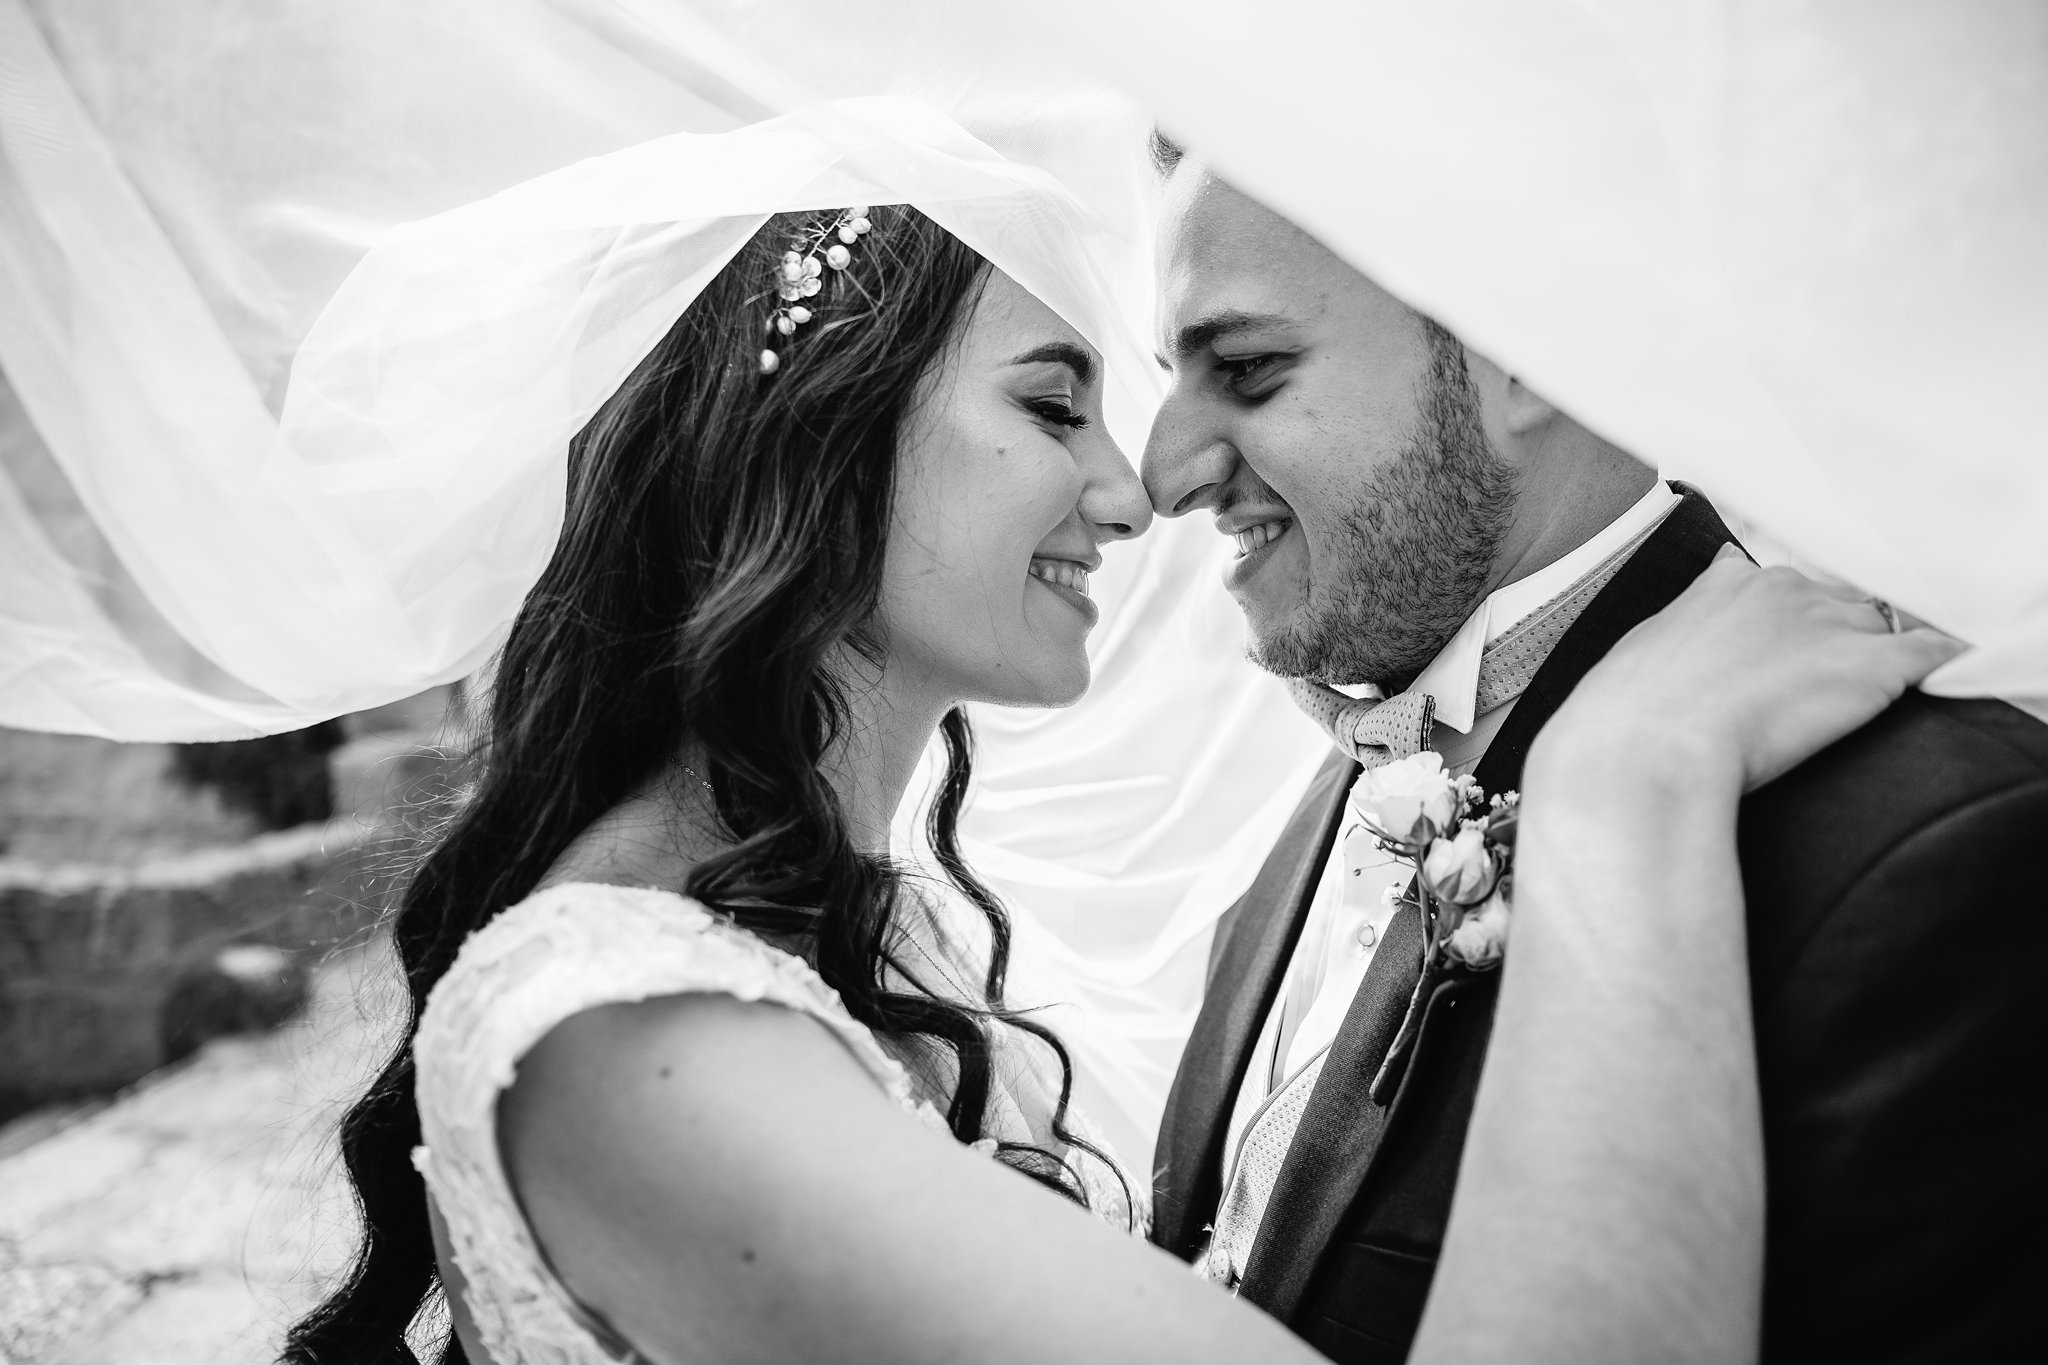 Desiree and Andrei's Wedding at Villa Mdina Naxxar_0048.jpg